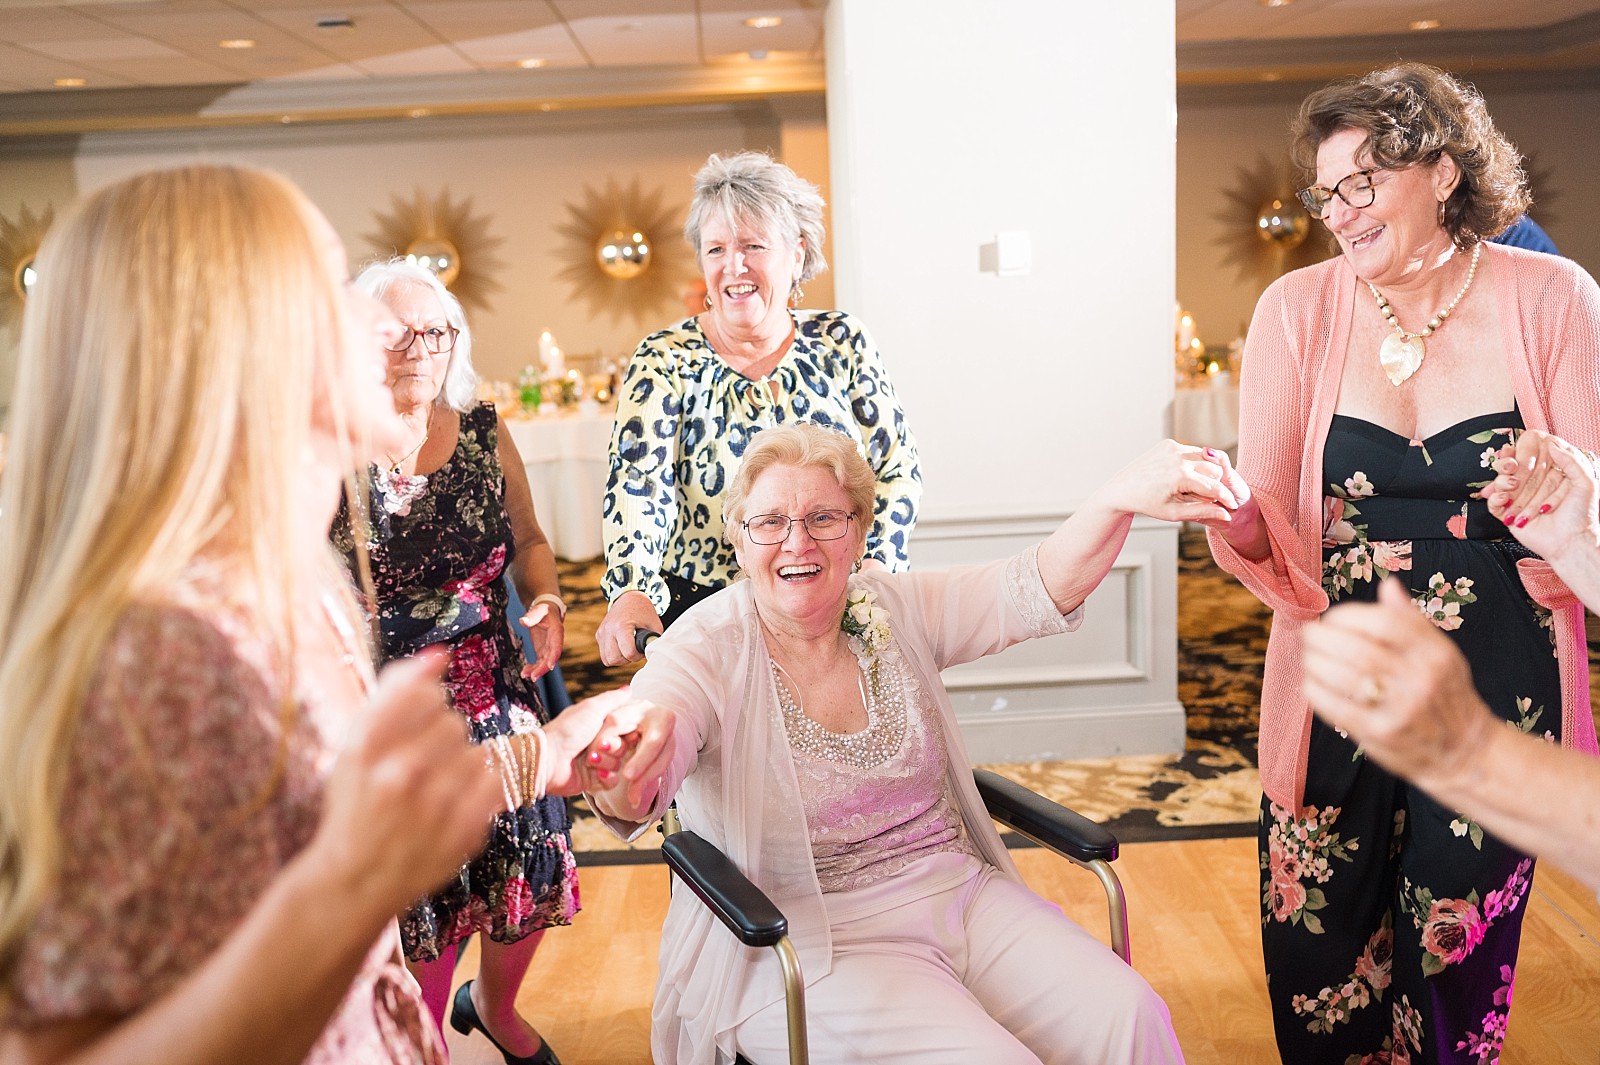 Wedding guests dancing during wedding reception | Raleigh Wedding Photographer Sarah Hinckley